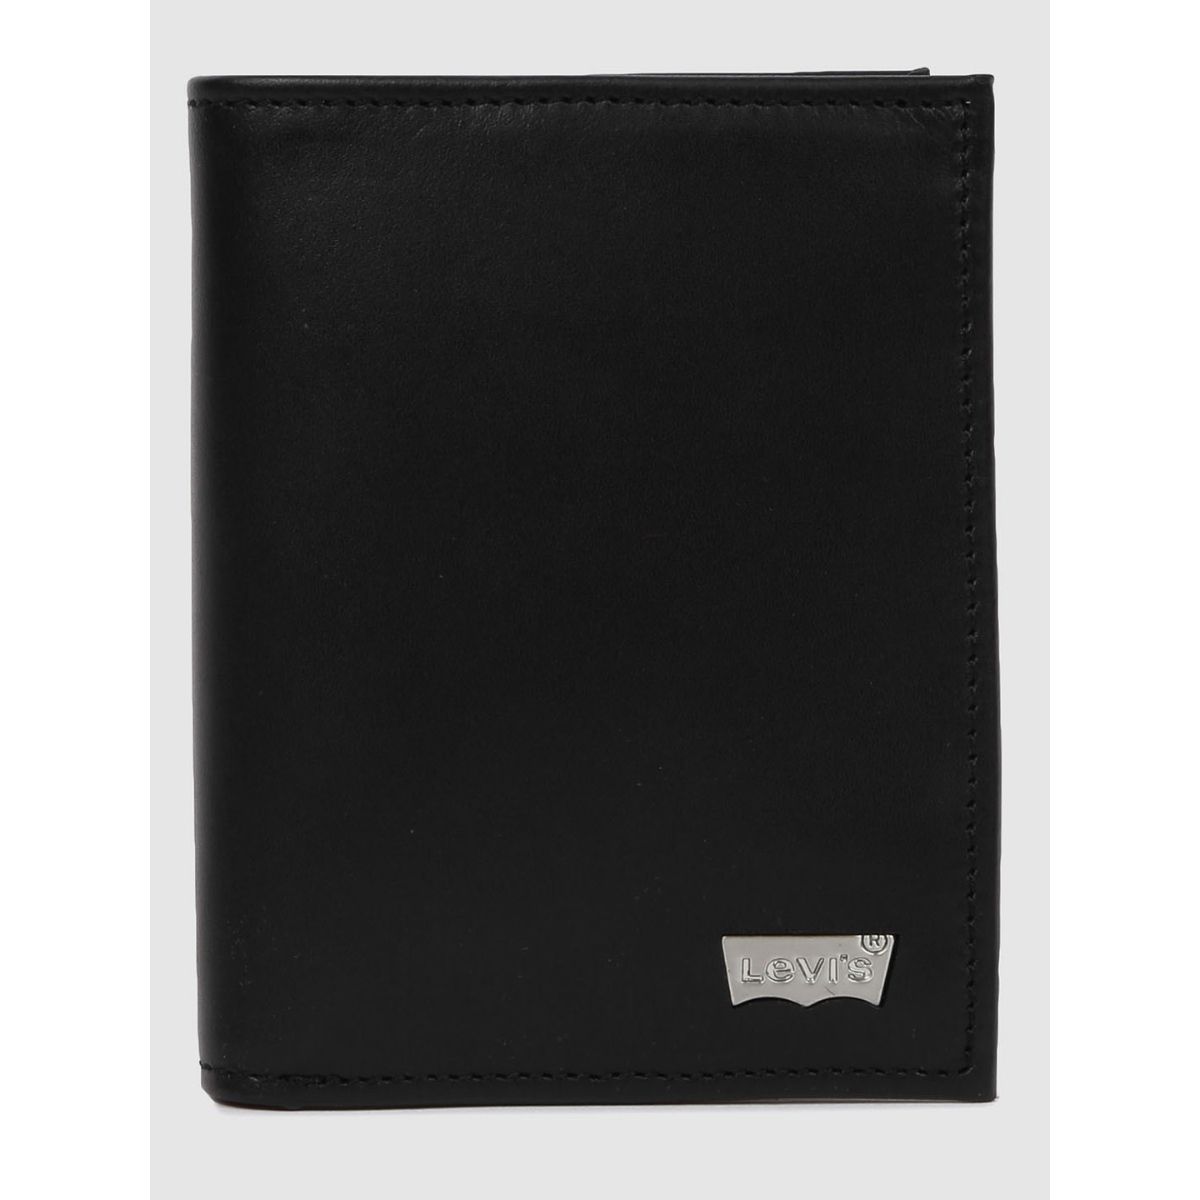 LEVI'S Men Genuine Leather Wallet w/ Valet RFID Protection Tan | eBay